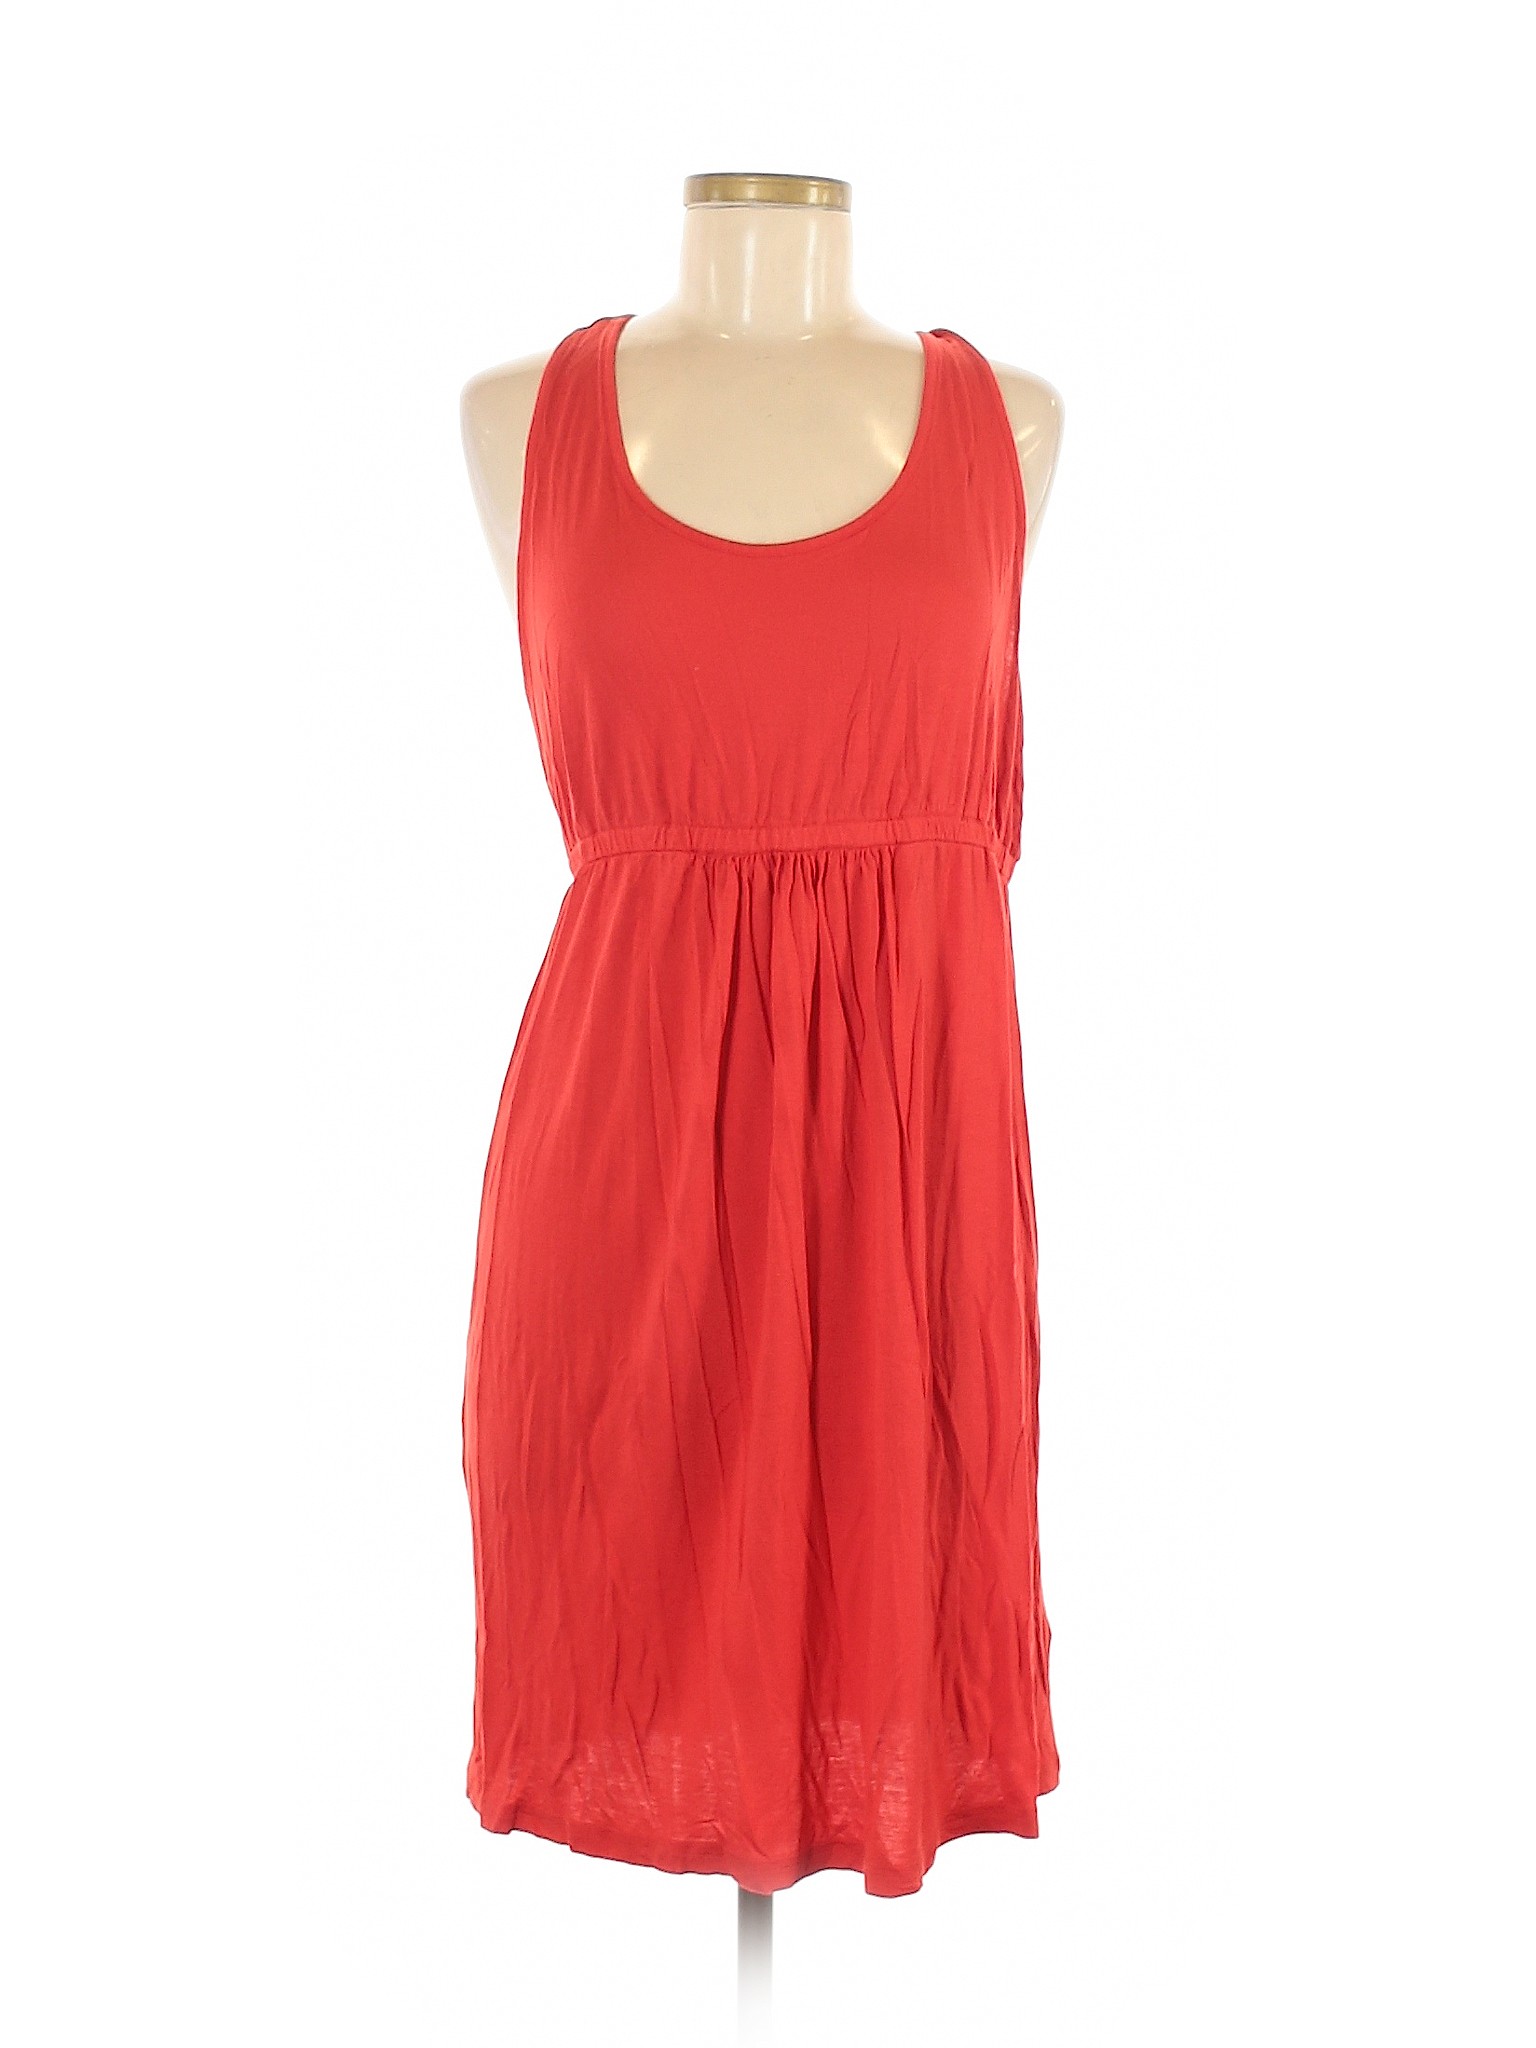 H&M Women Red Casual Dress M | eBay